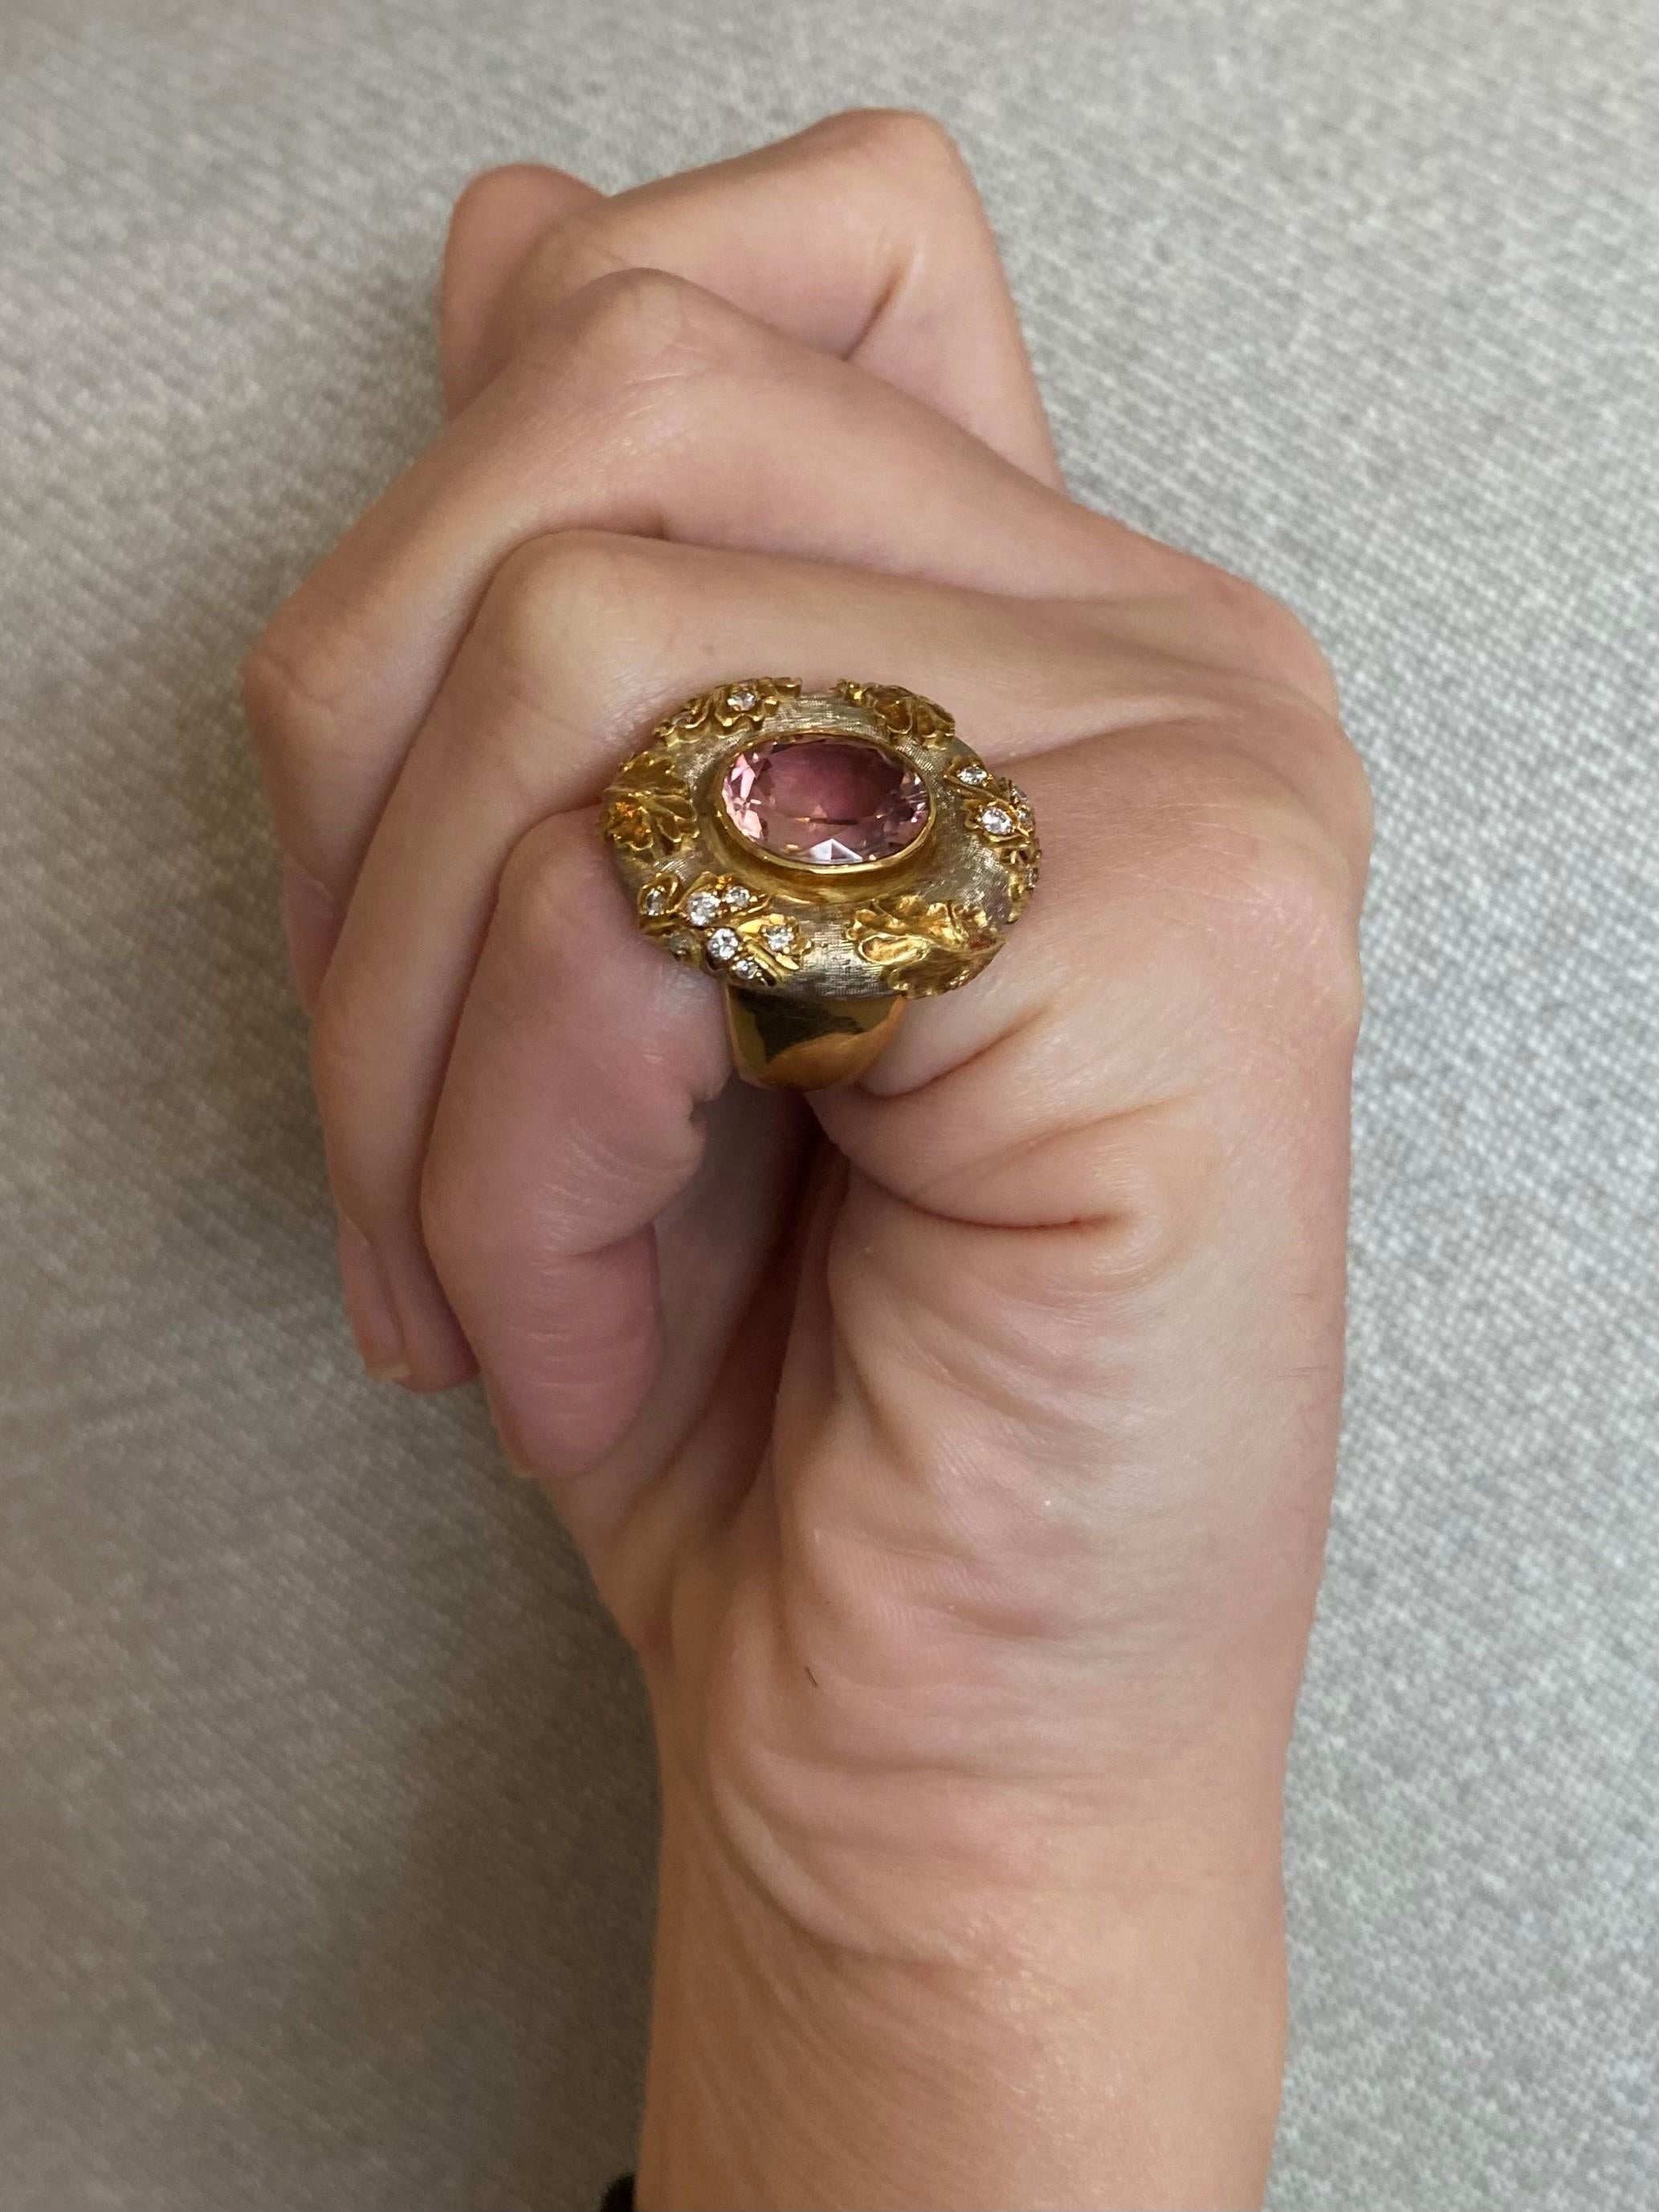 Baroque Revival Elizabeth Gage London Cocktail Ring in 18Kt Gold 6.95 Cts Diamonds & Rose Topaz